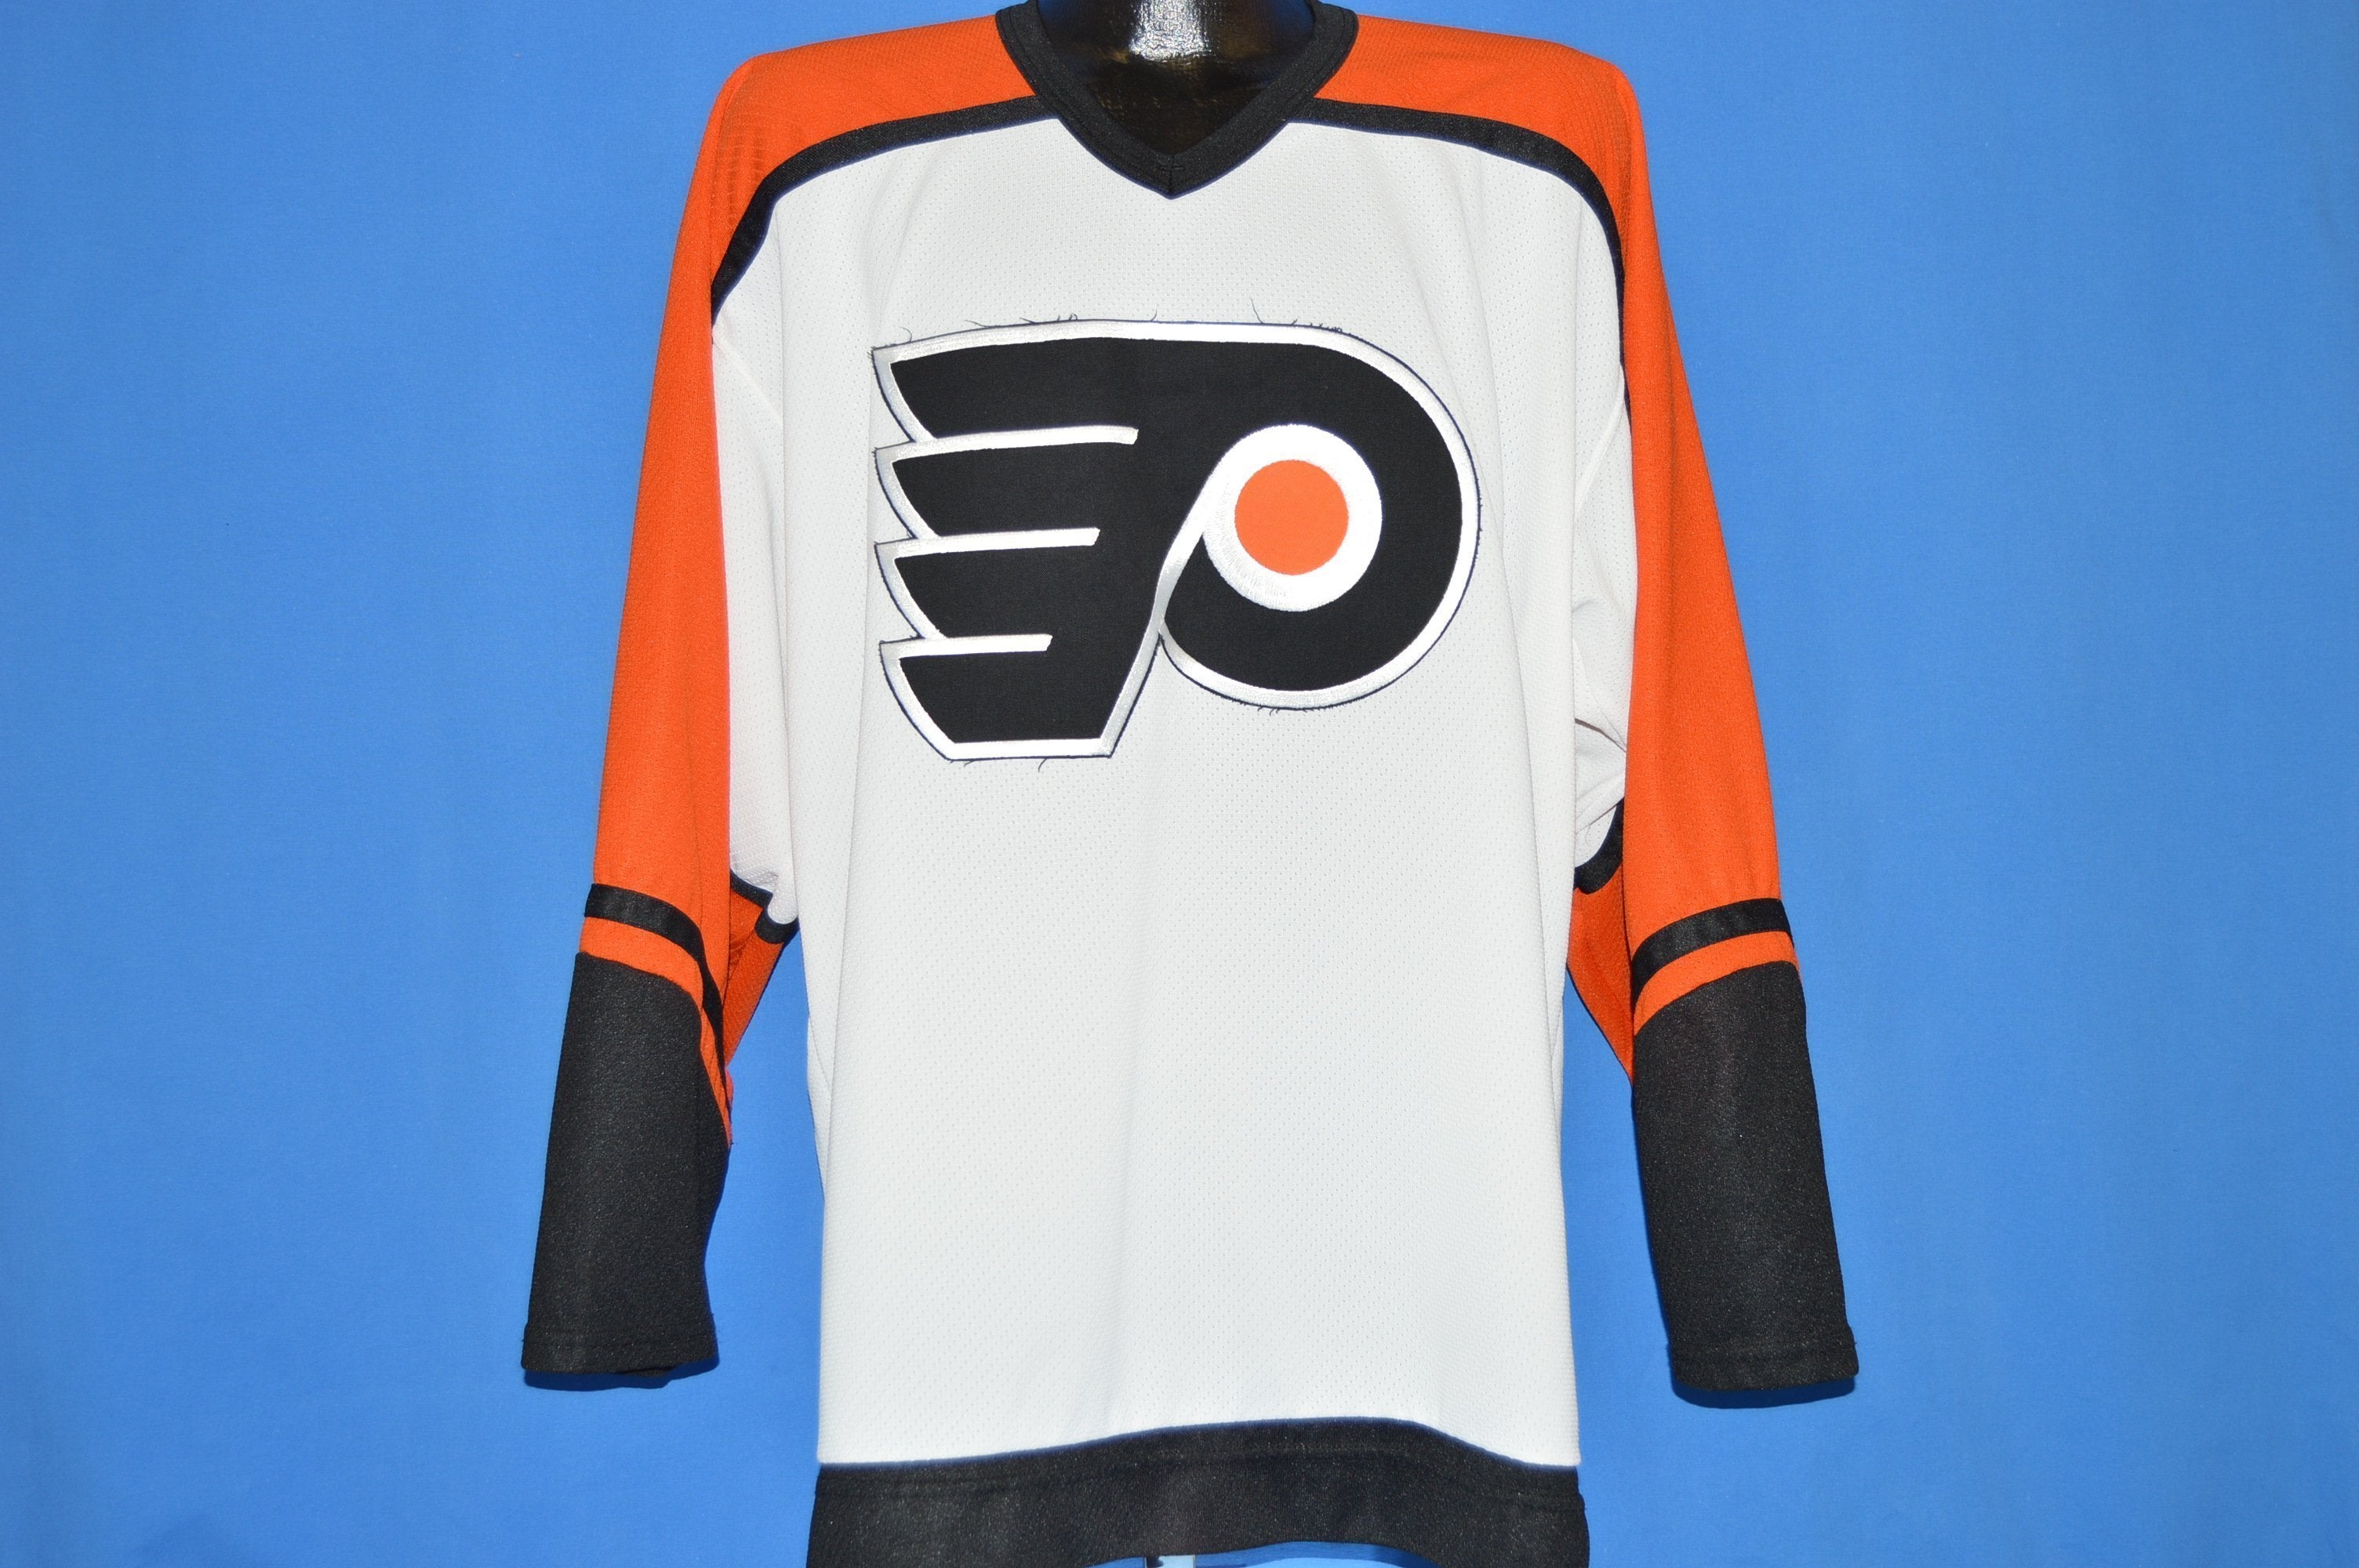 Vtg Pro Player Philadelphia Flyers Hockey Jersey 90s Embroidered NHL Men's  Large